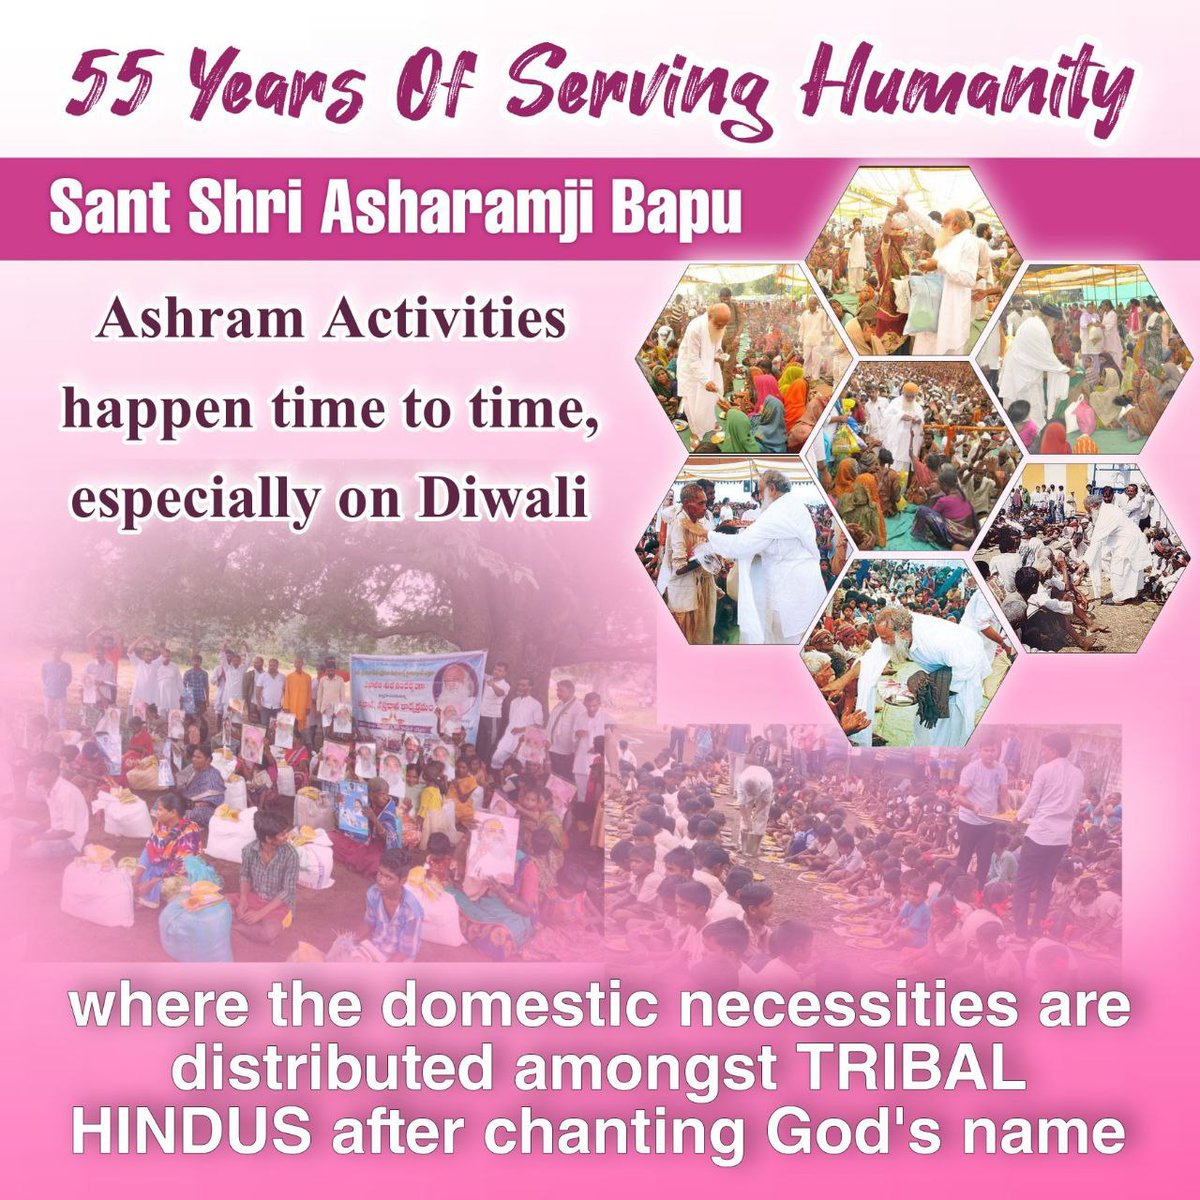 @YogVedantSamiti #प्राणिमात्र_के_हितैषी Sant Shri Asharamji Bapu बाल संस्कार केंद्र मातृ पितृ पूजन दिवस तुलसी पूजन दिवस चल स्व की ओर विद्यार्थी अनुष्ठान शिविर अनेको सत्प्रवृतियां सतत जारी
Inspirational for Society